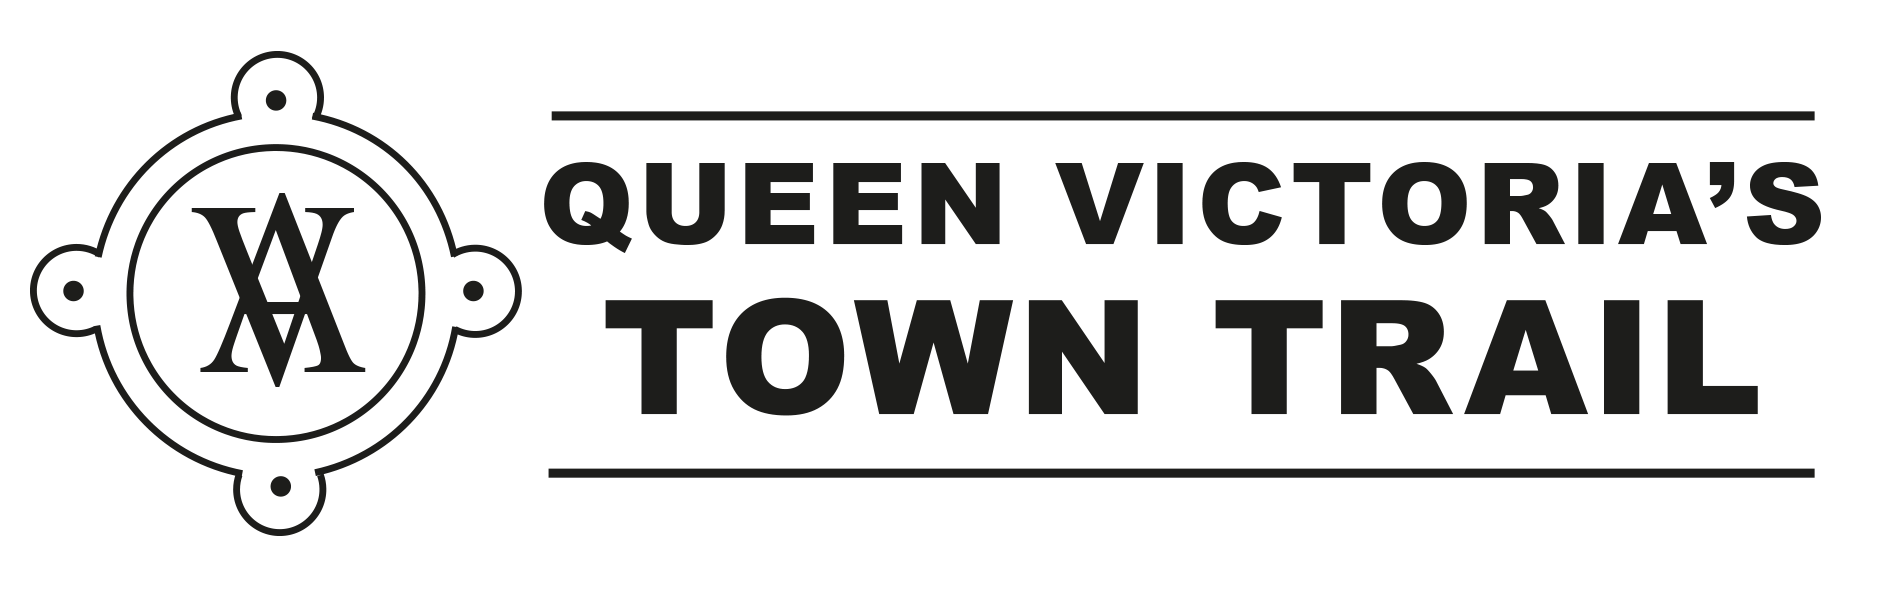 Queen Victoria's Town Trail